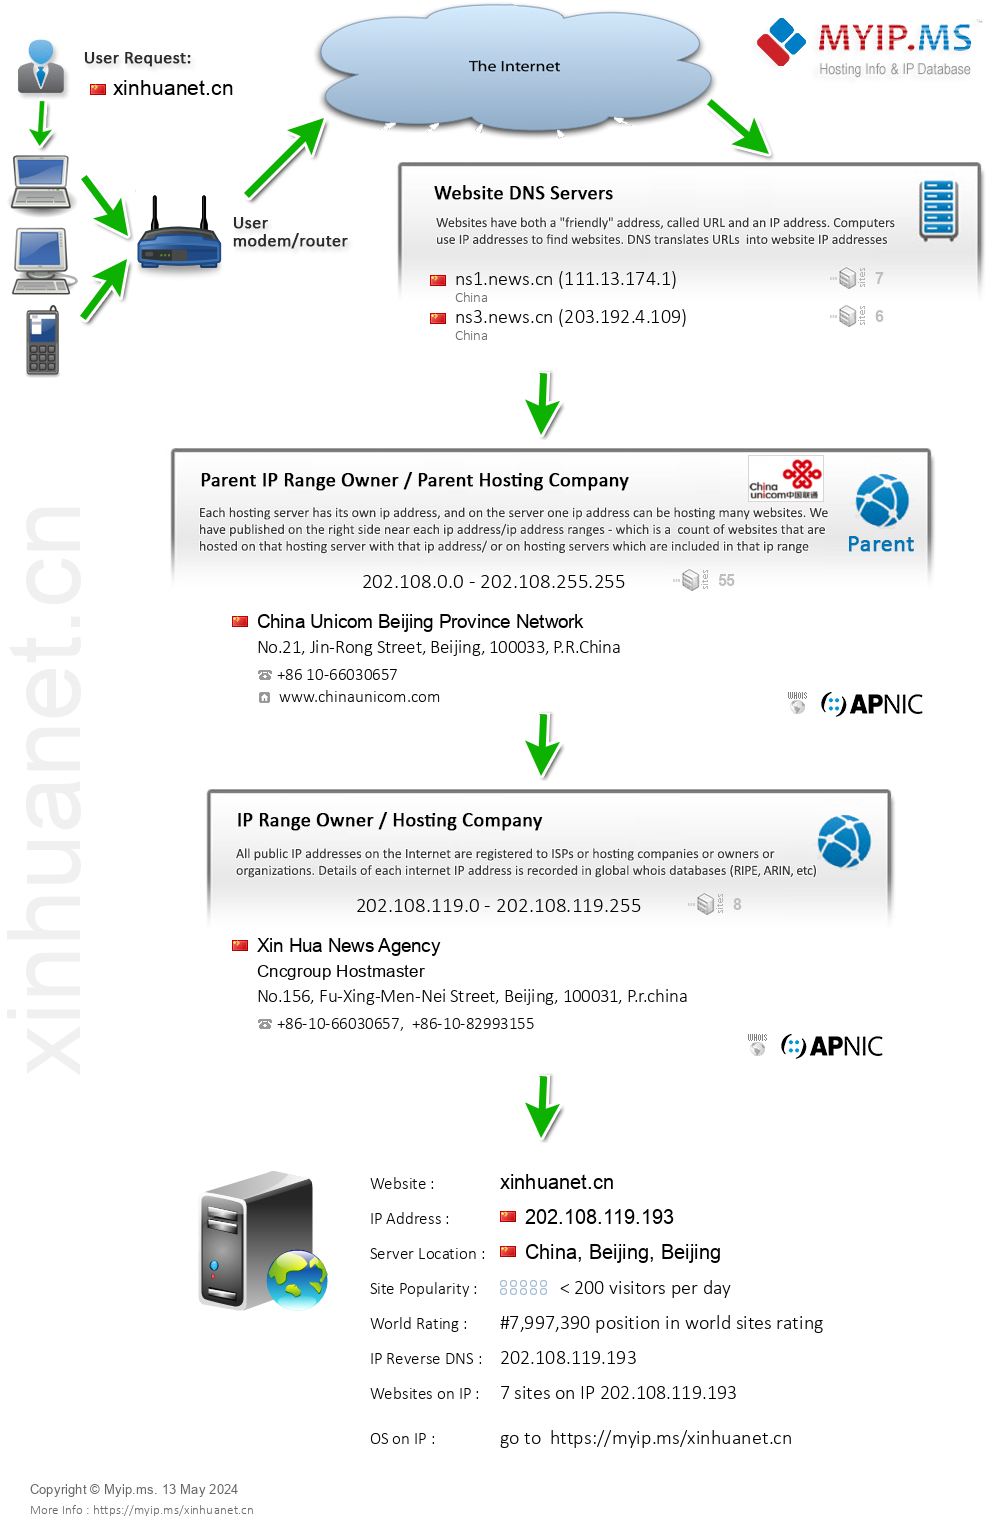 Xinhuanet.cn - Website Hosting Visual IP Diagram